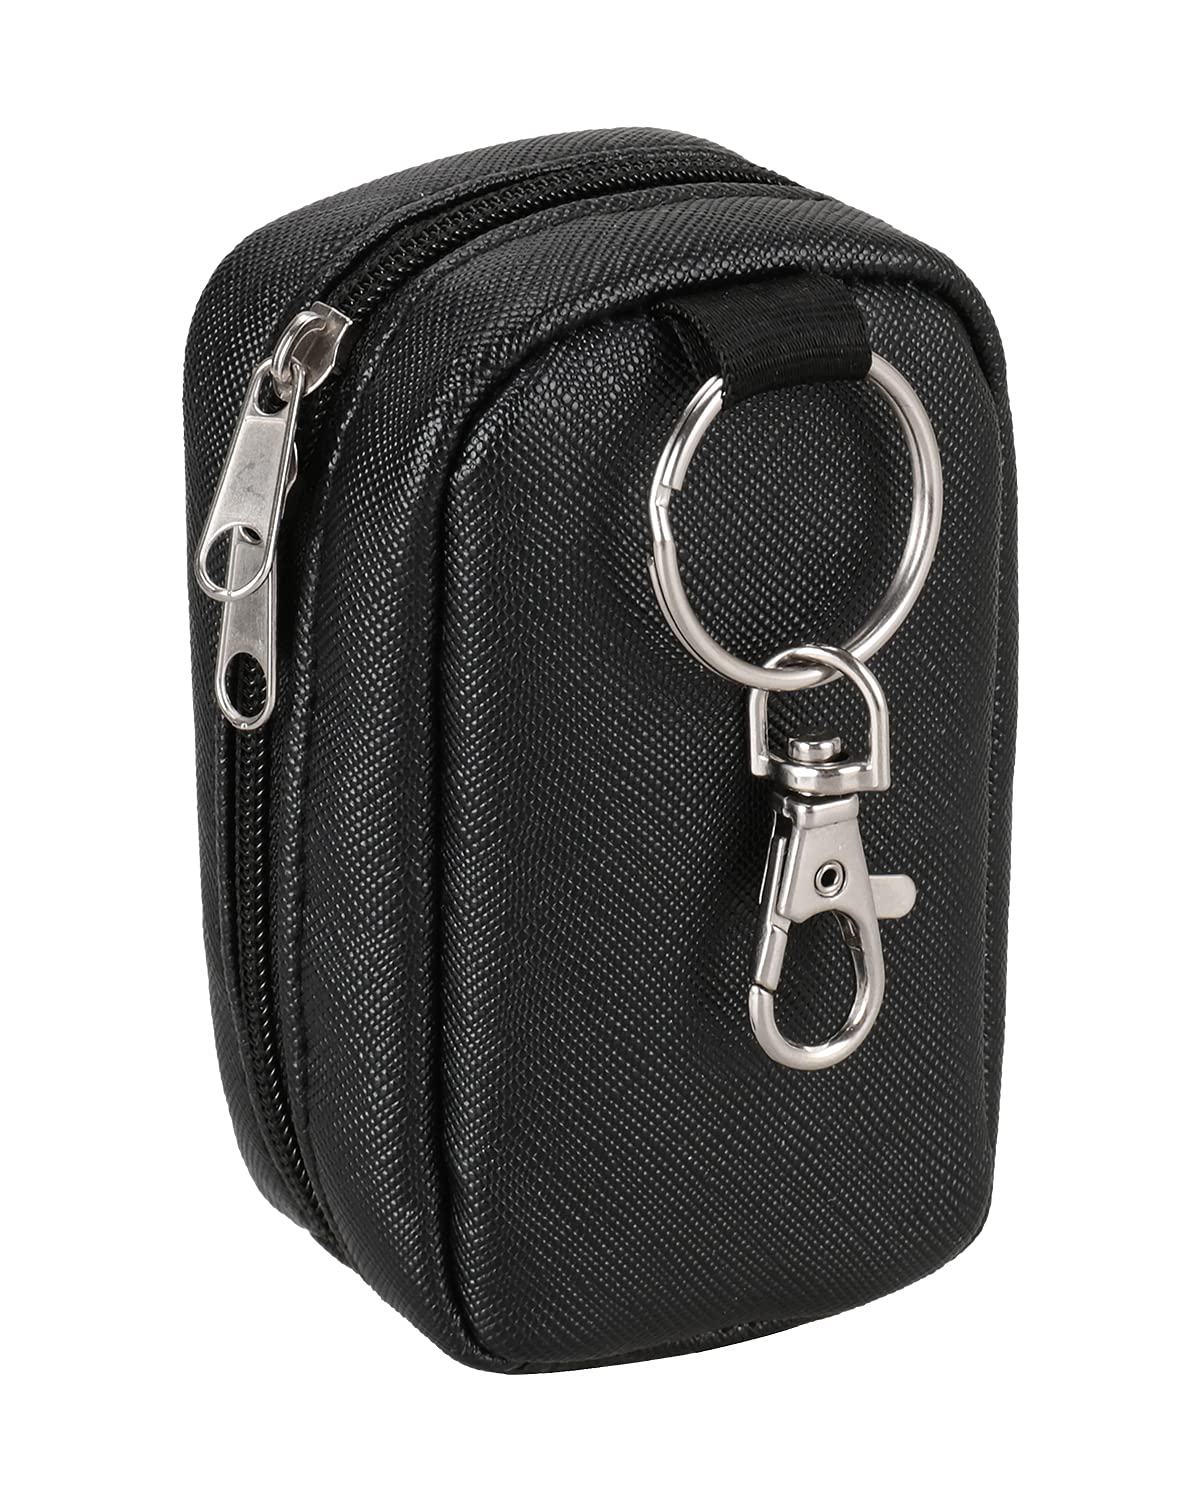 Key Holders Handbags, Small Zipper Pouch